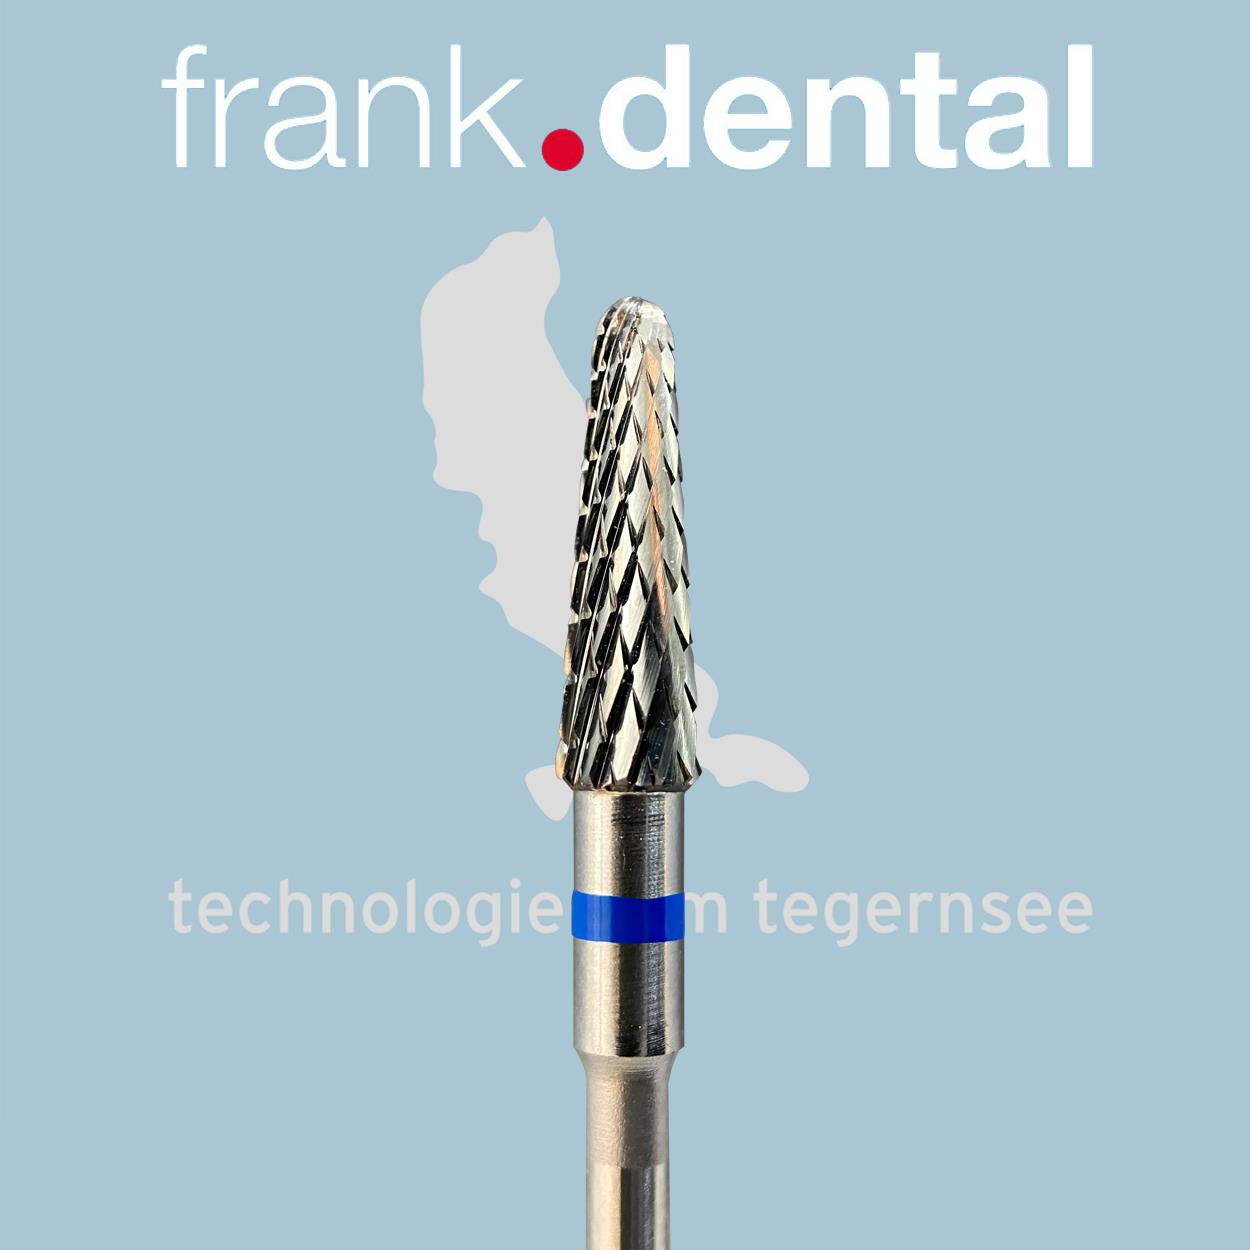 DentrealStore - Frank Dental Frank Dental Tungsten Carbide Bur - Monster Bur for lab - 79K